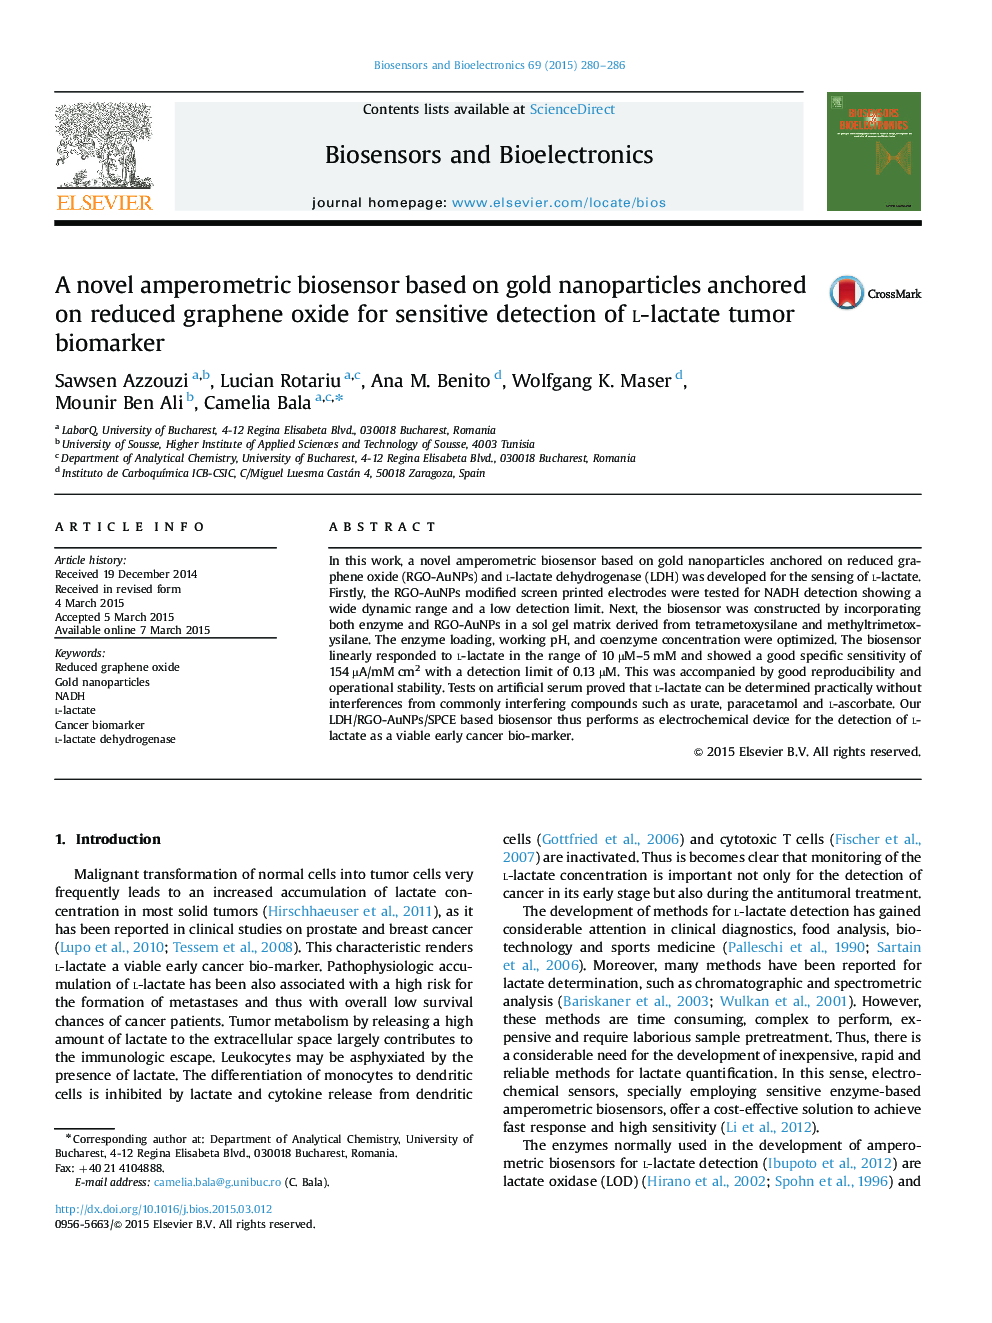 A novel amperometric biosensor based on gold nanoparticles anchored on reduced graphene oxide for sensitive detection of l-lactate tumor biomarker